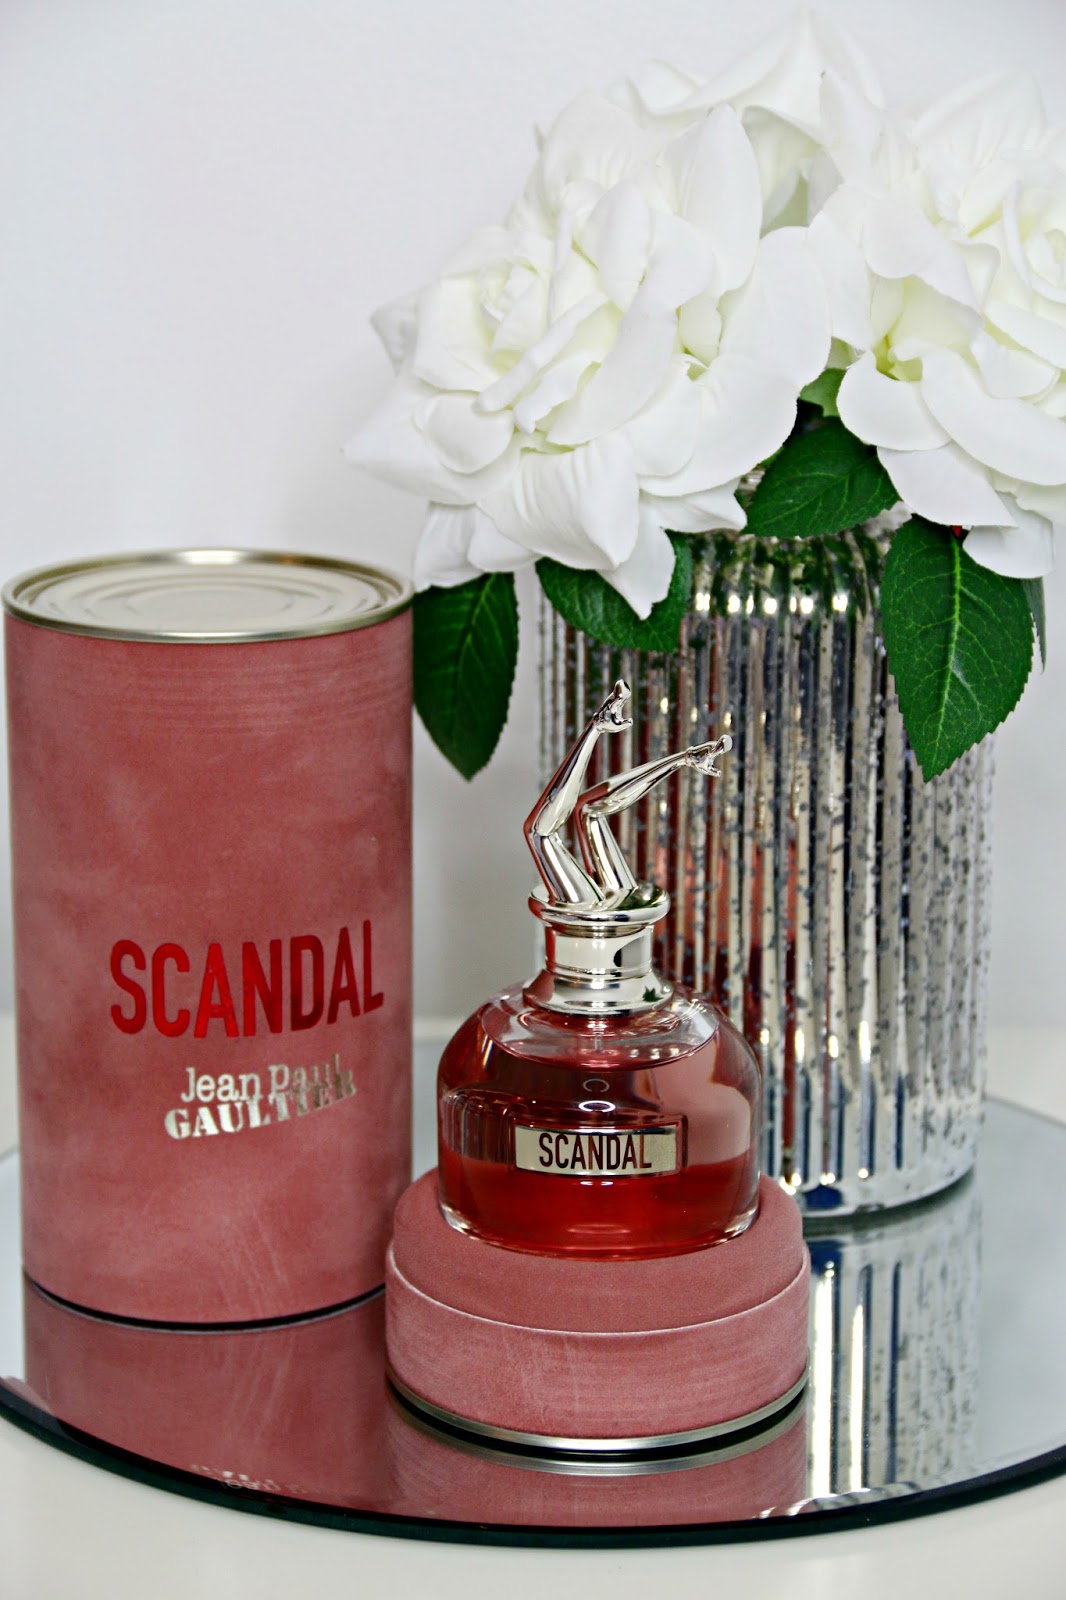 Jean Paul Gaultier Scandal Perfume Review